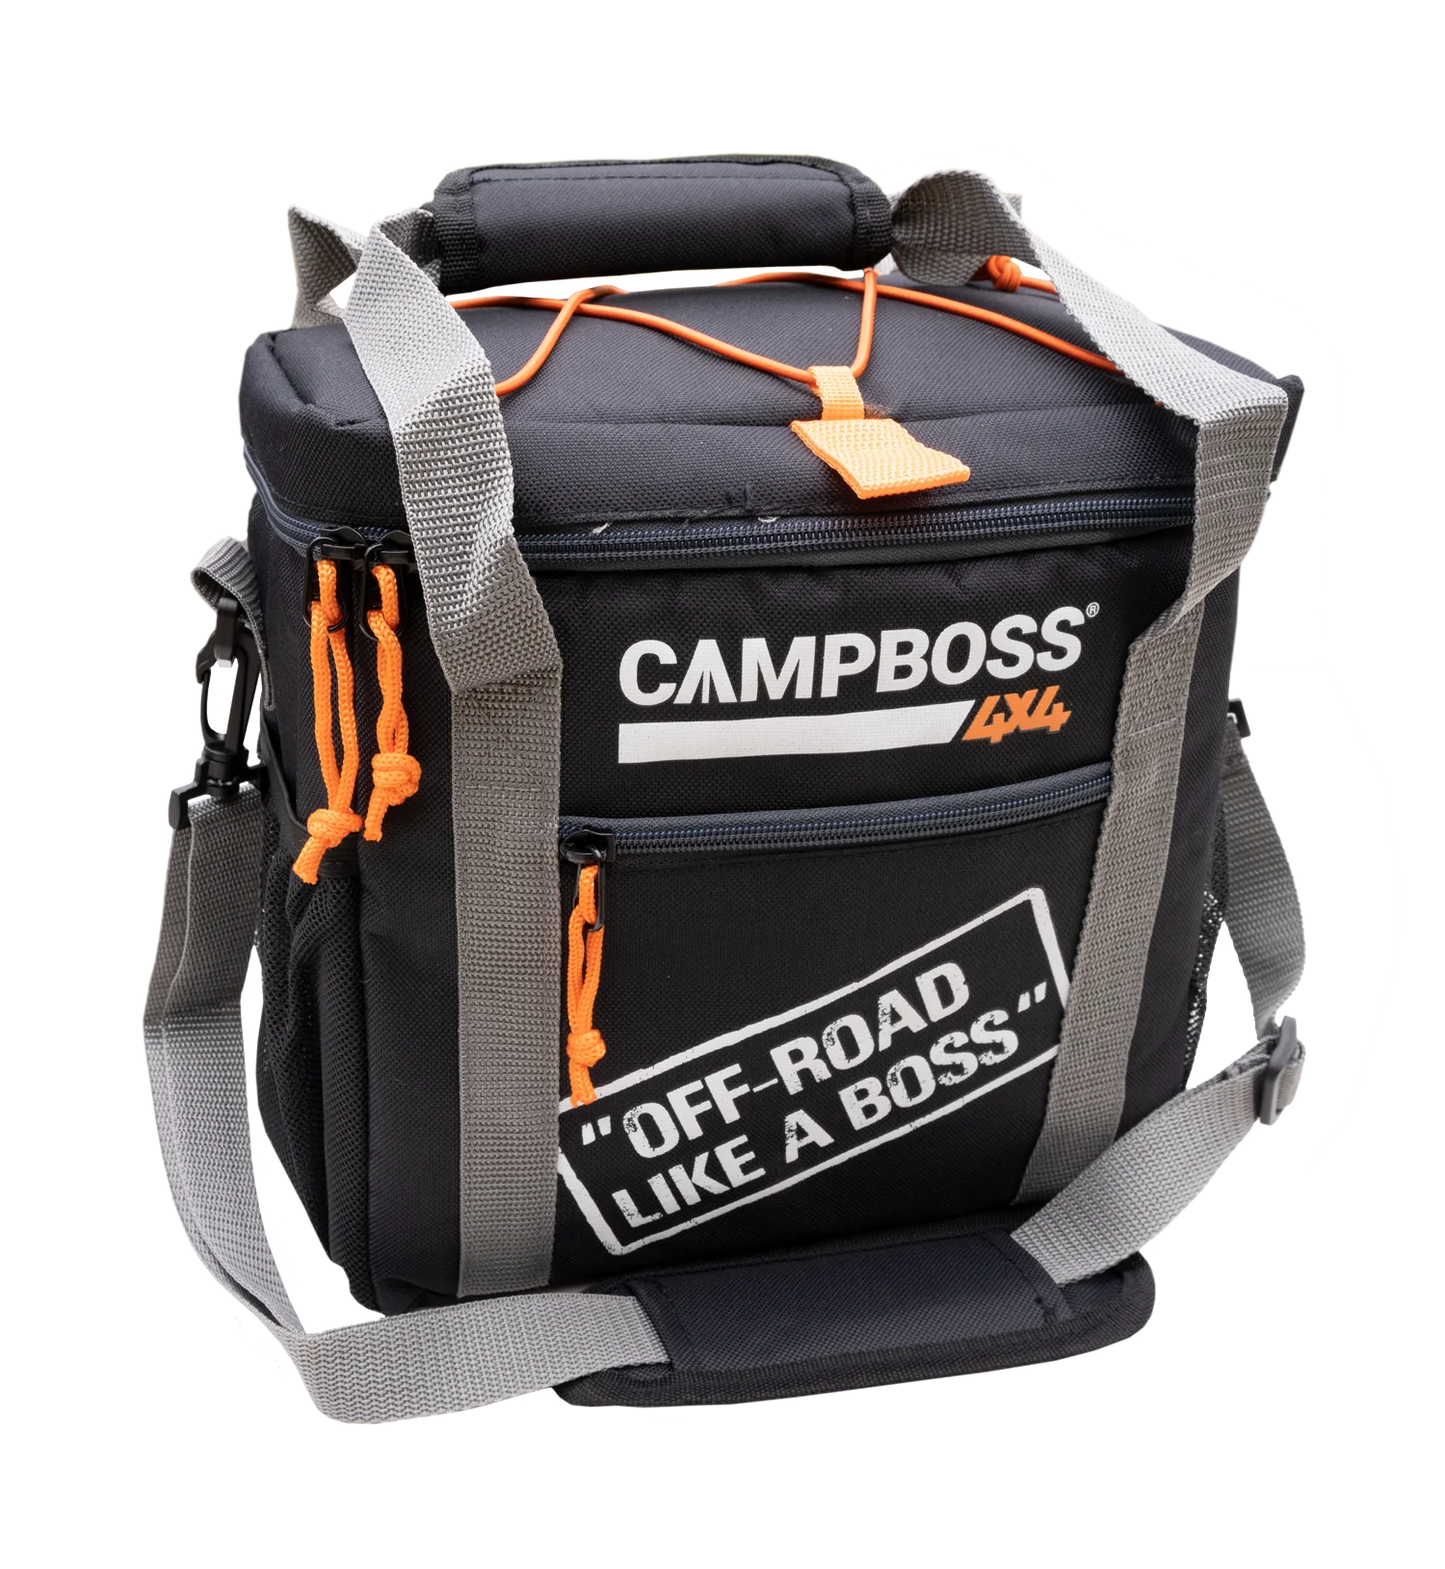 CAMPBOSS 4x4 Cooler Bag